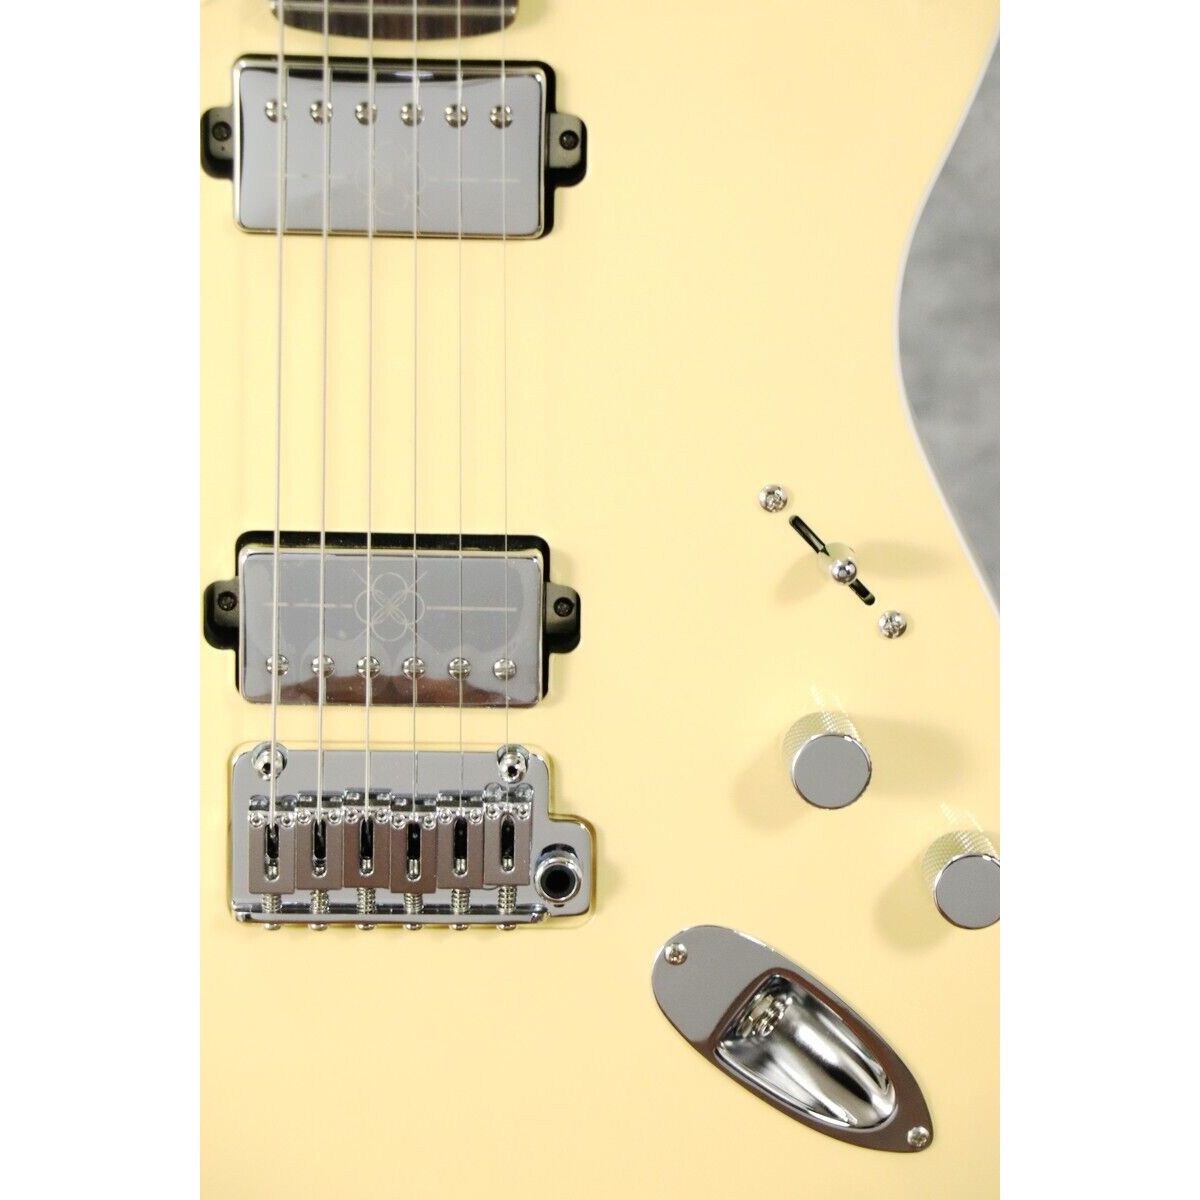 Fender Mami Stratocaster Omochi Vintage White《ギグバッグ